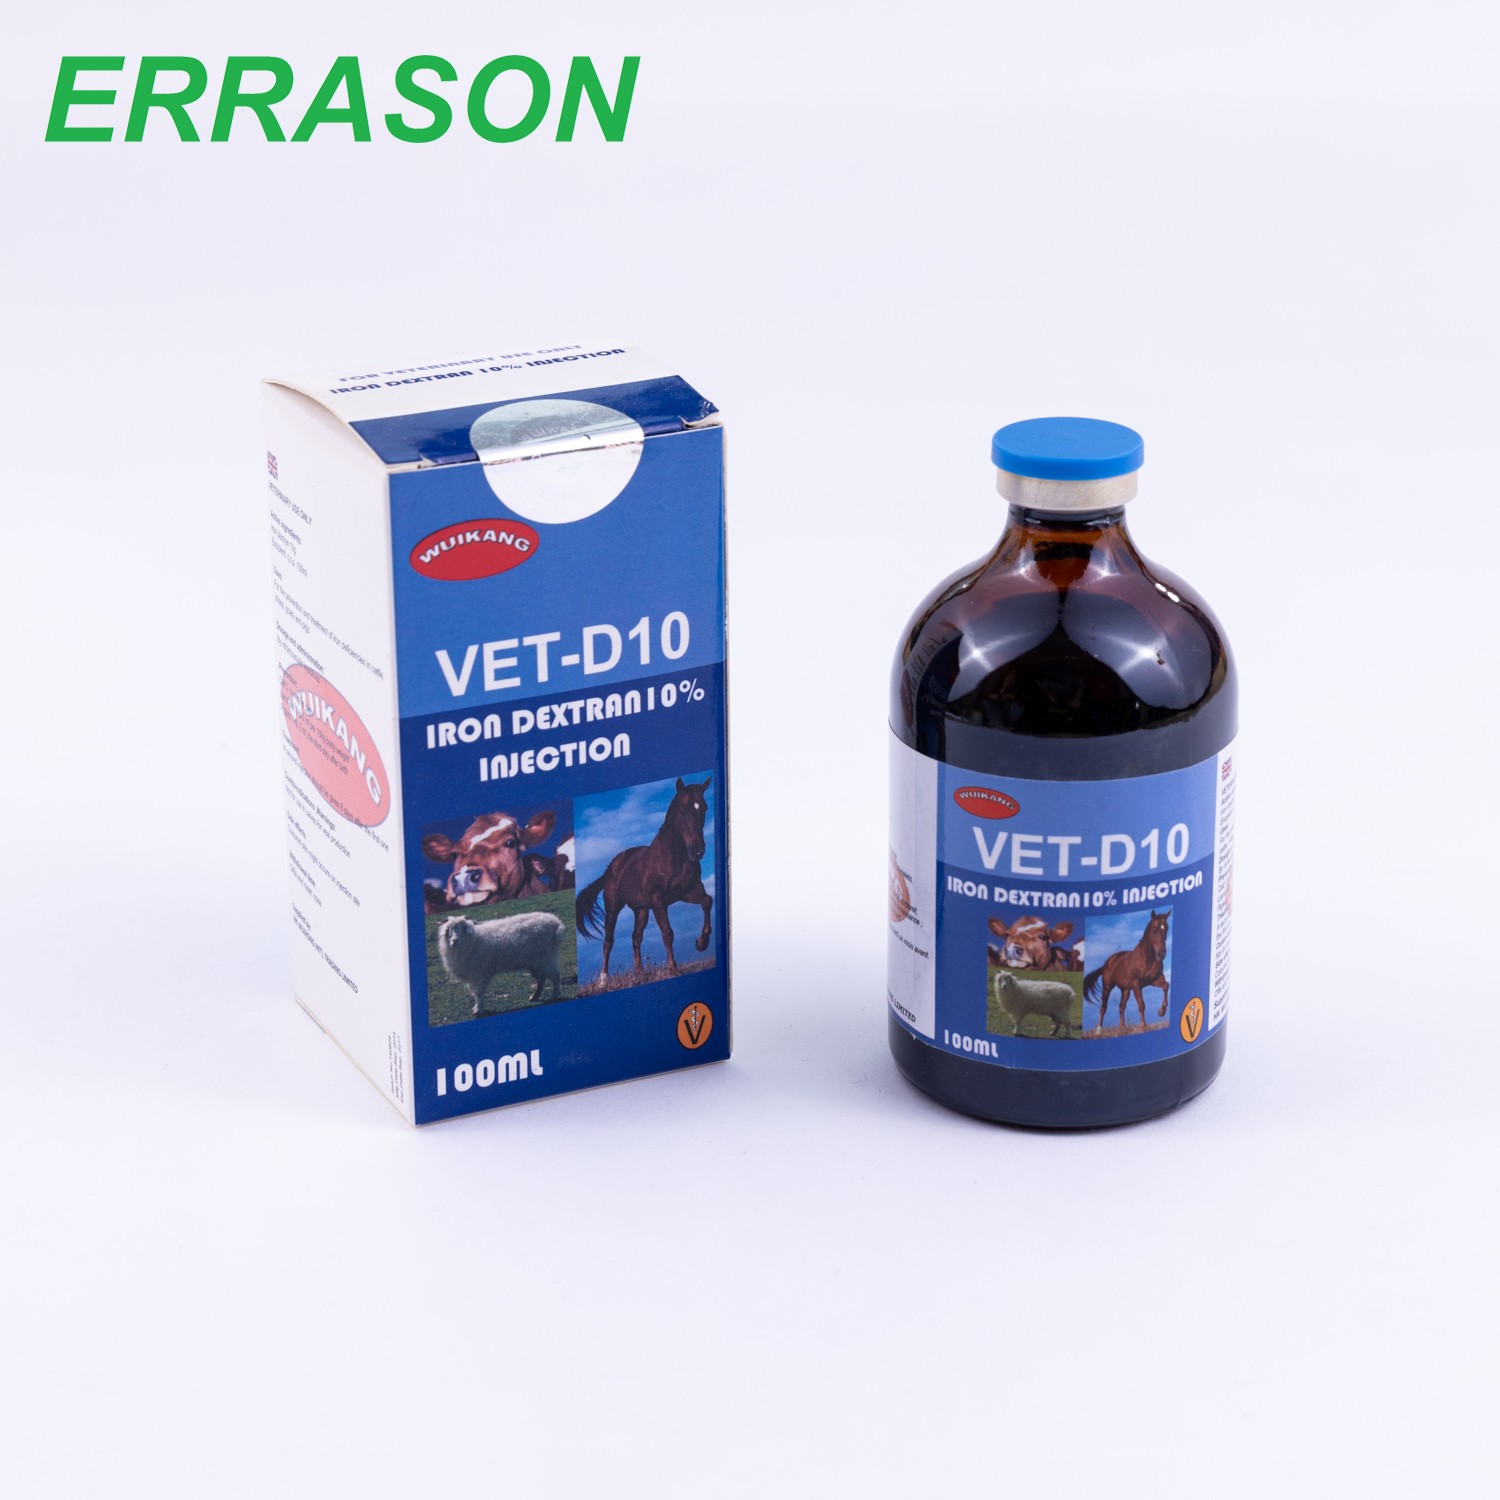 Iron Dextran 10% liquid injection